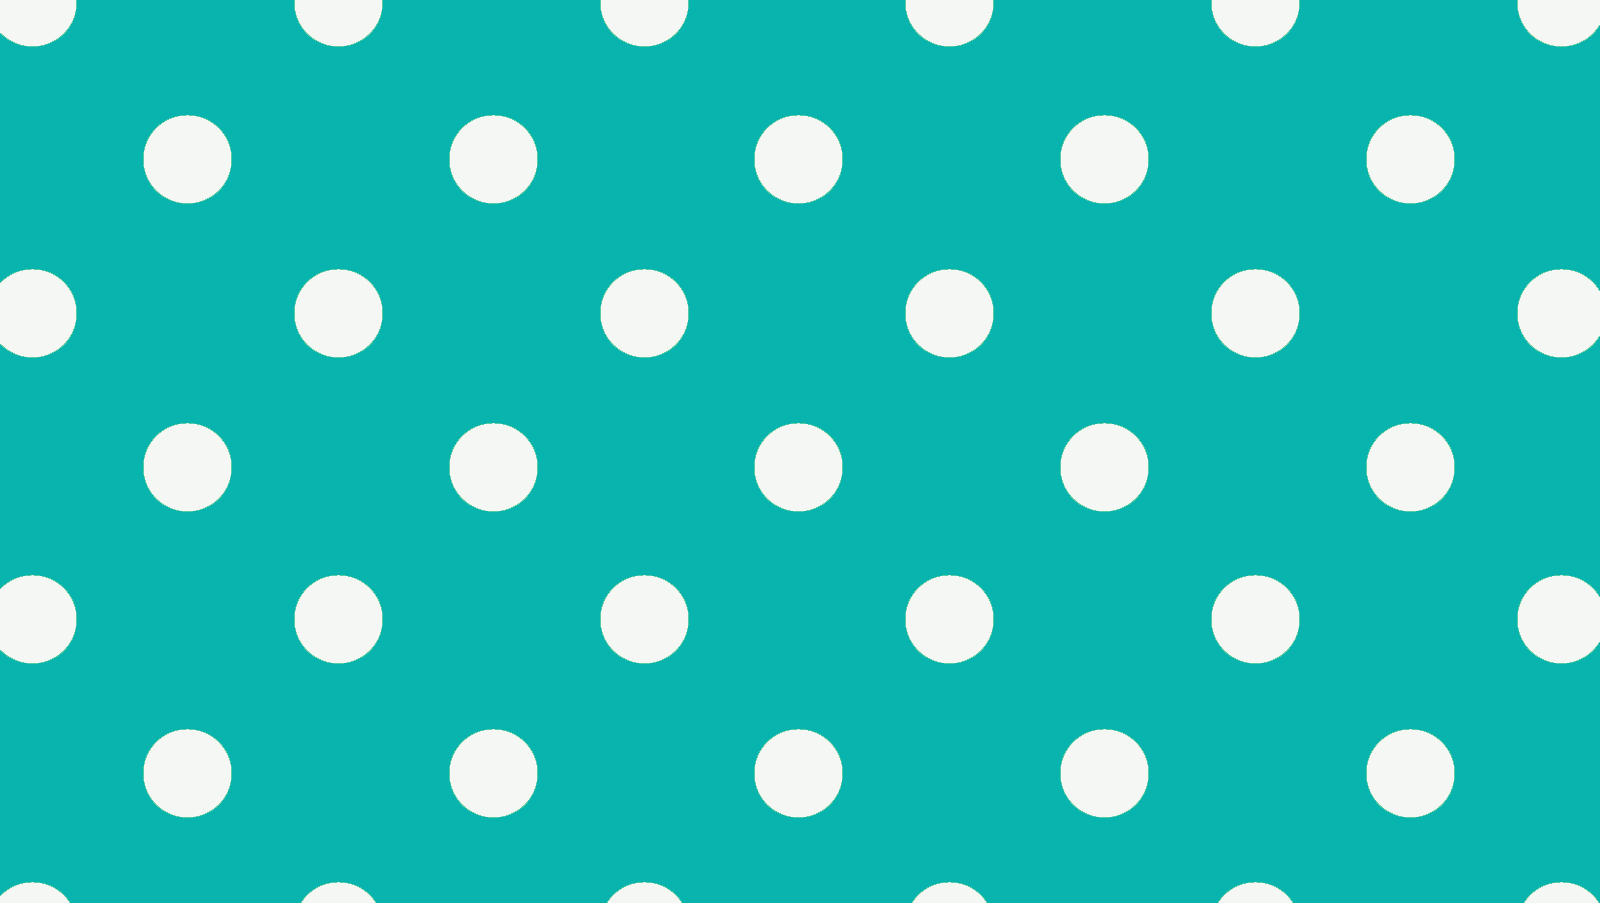 polka dot wallpaper,pattern,aqua,turquoise,polka dot,green